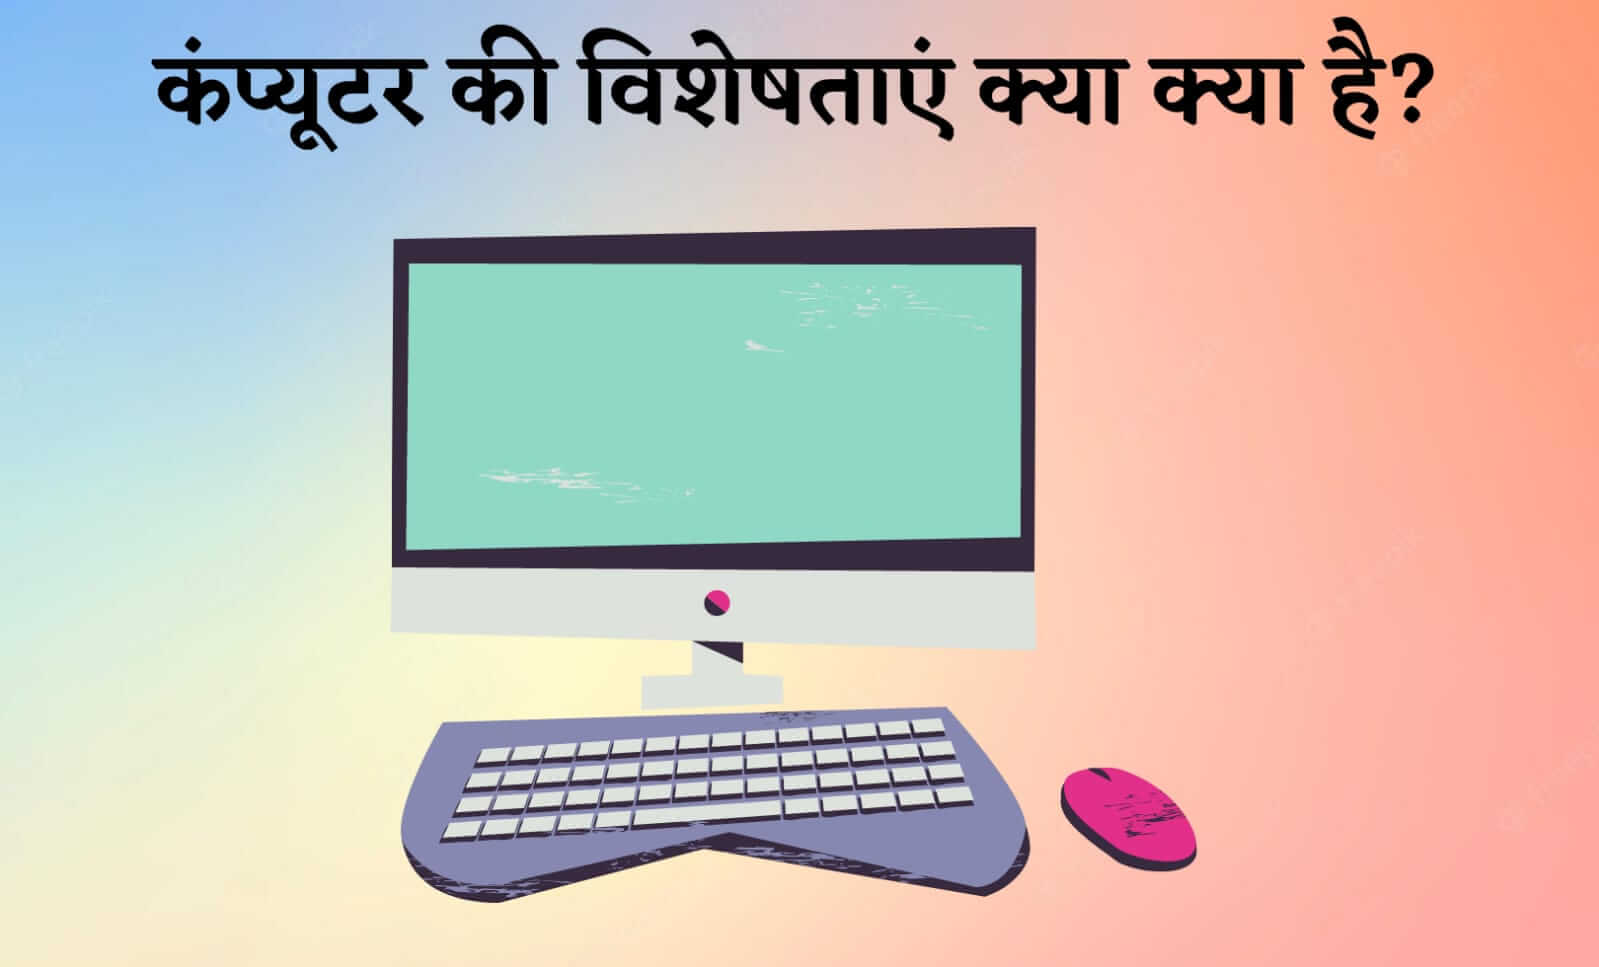 Characteristics Of Computer In Hindi